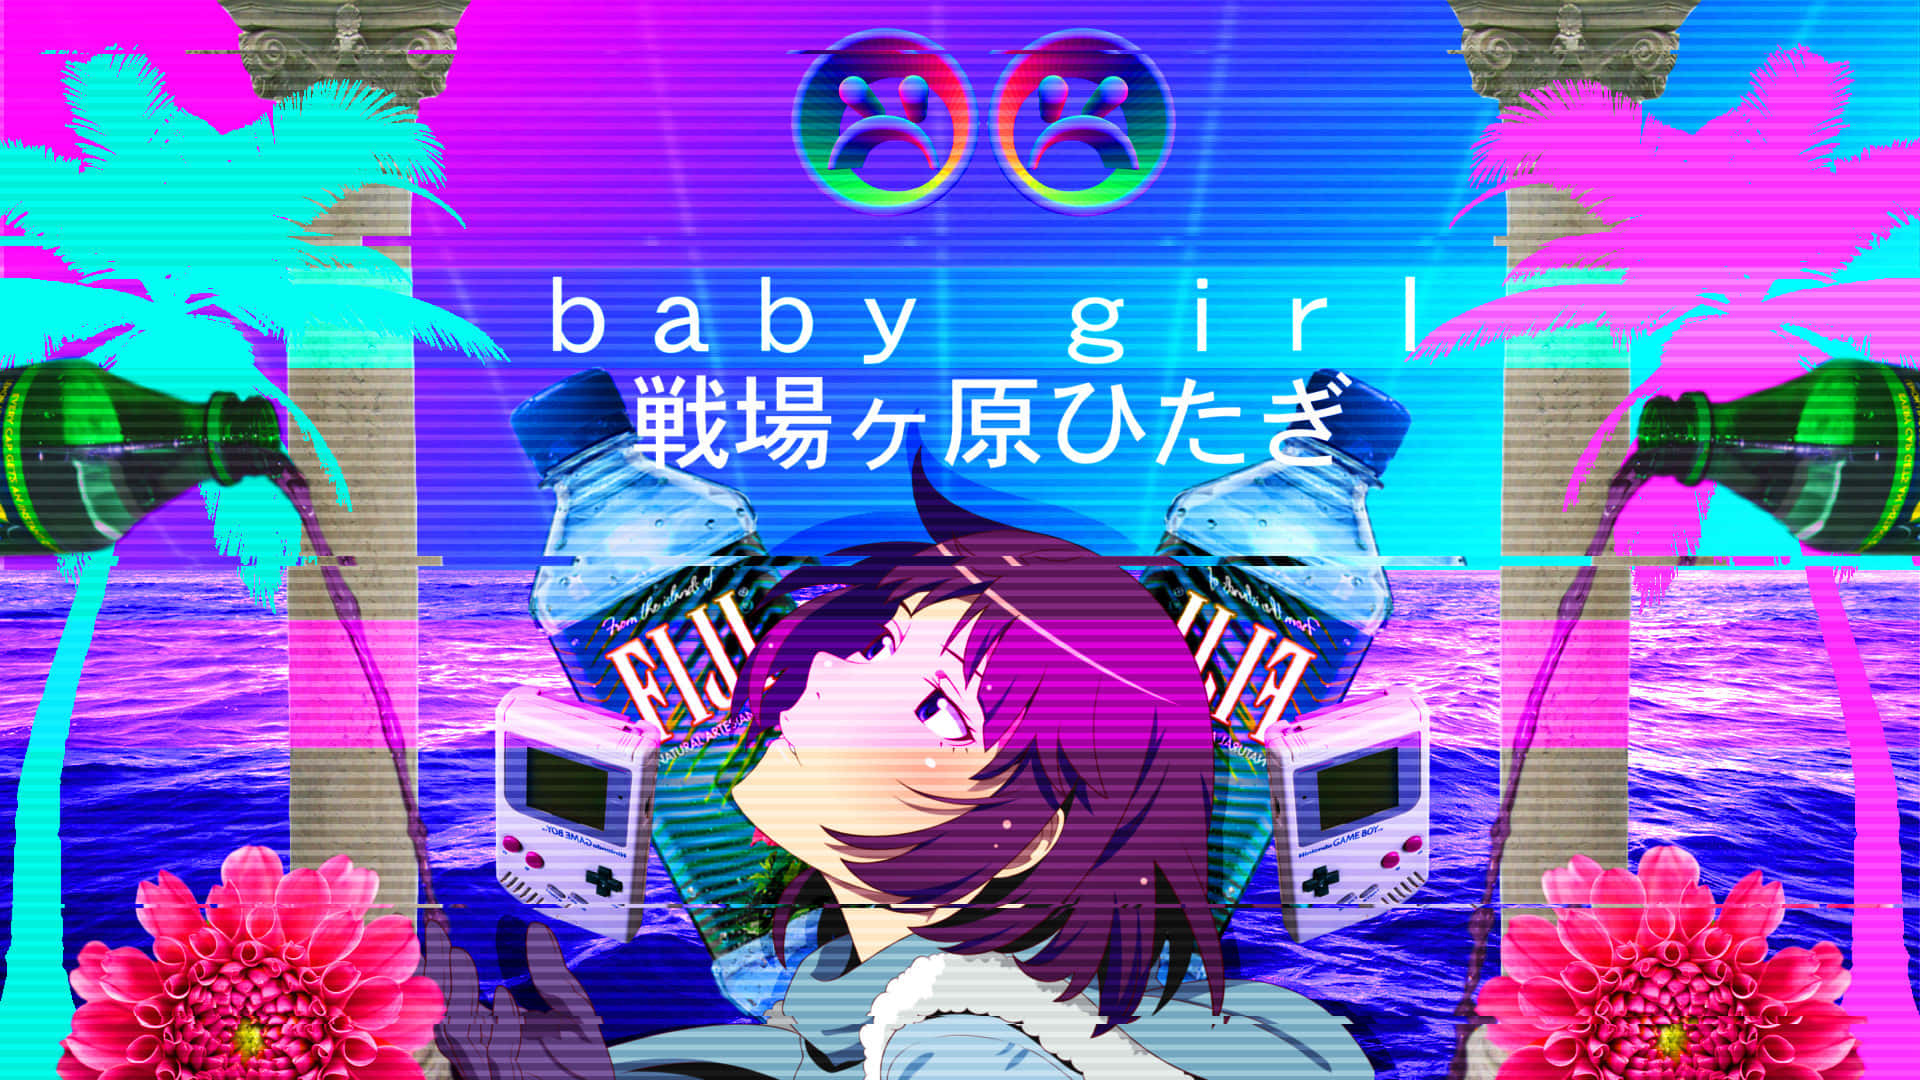 Anime Baby Girl Vaporwave Montage Background